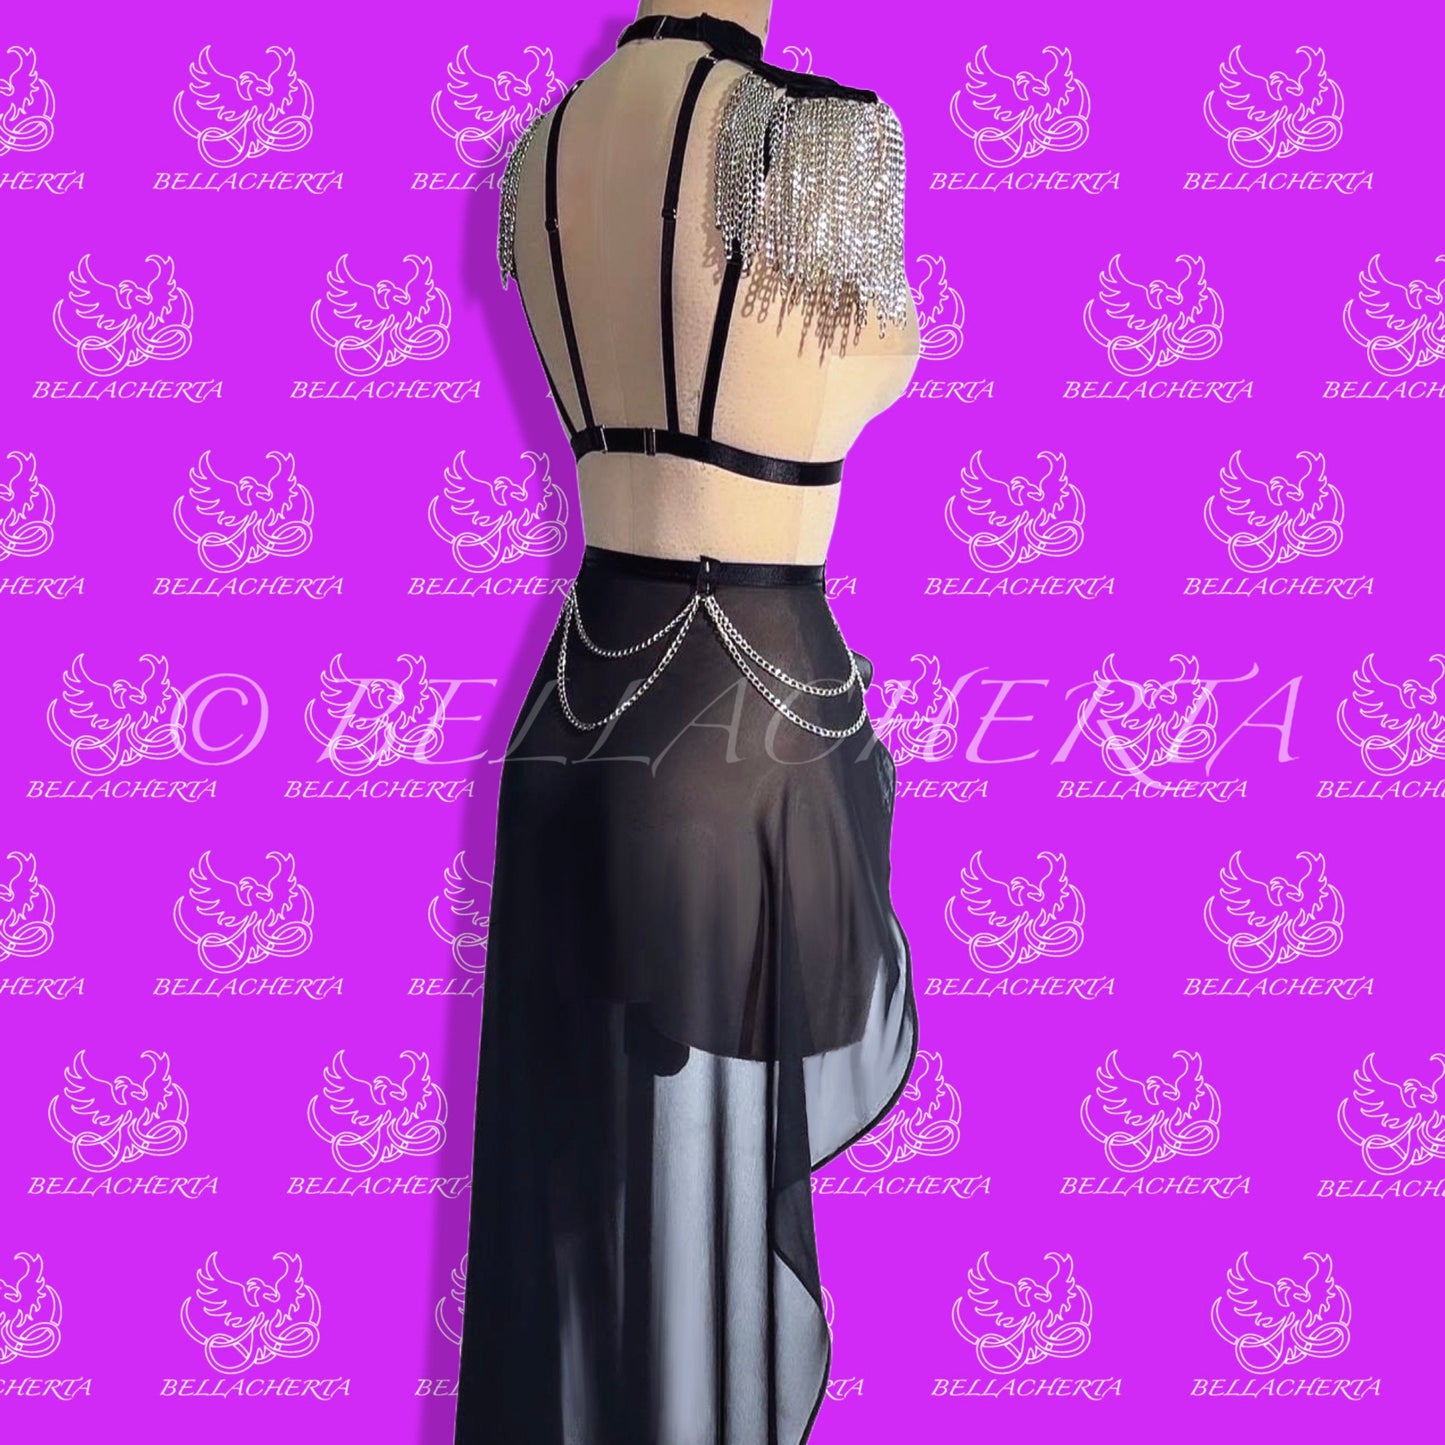 Chainlink Harness and Sheer Skirt Lingerie Set